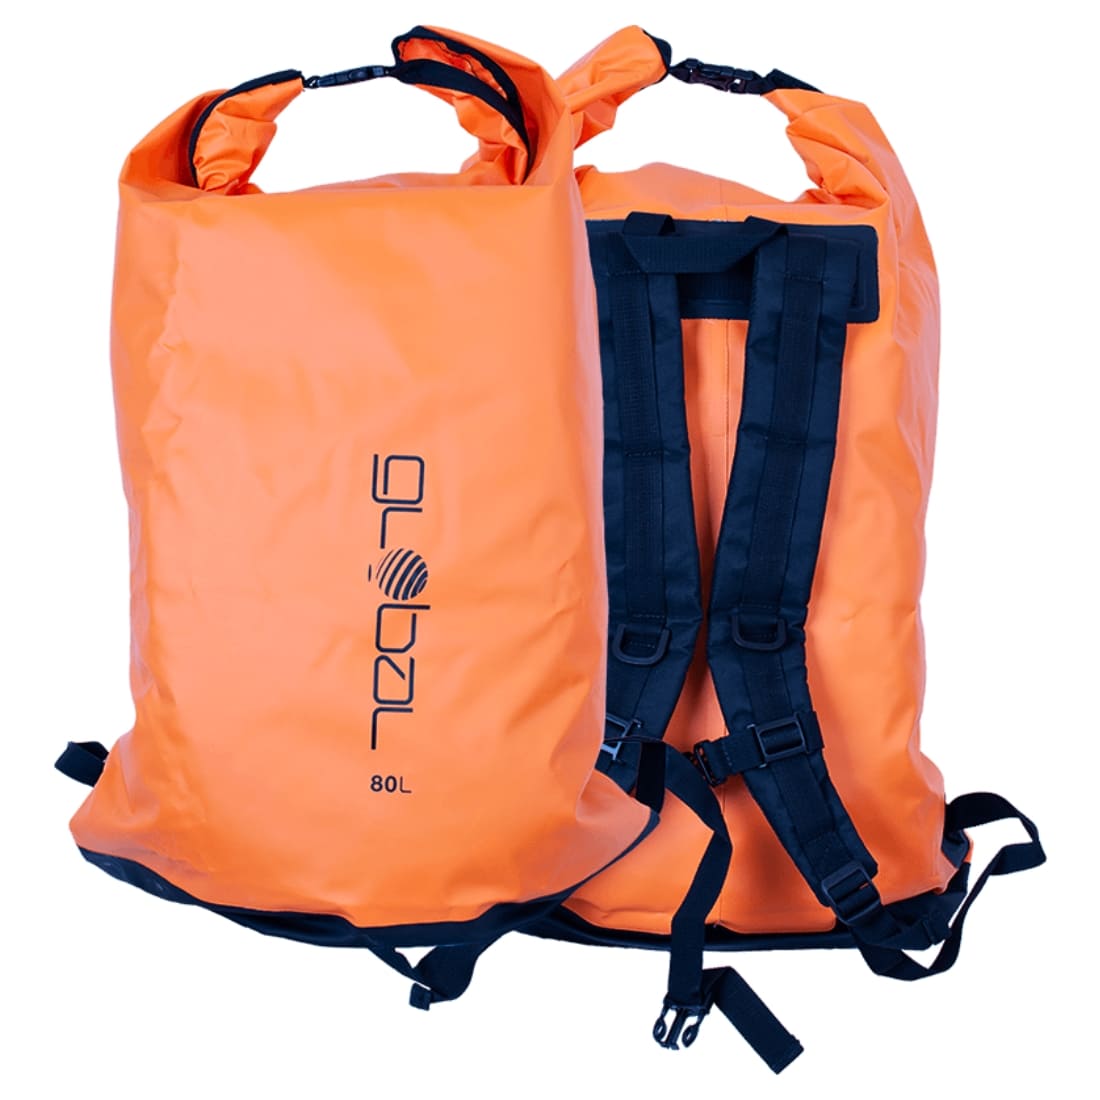 Global 80L Dry Bag - Orange - Wet/Dry Bag by Global 80L